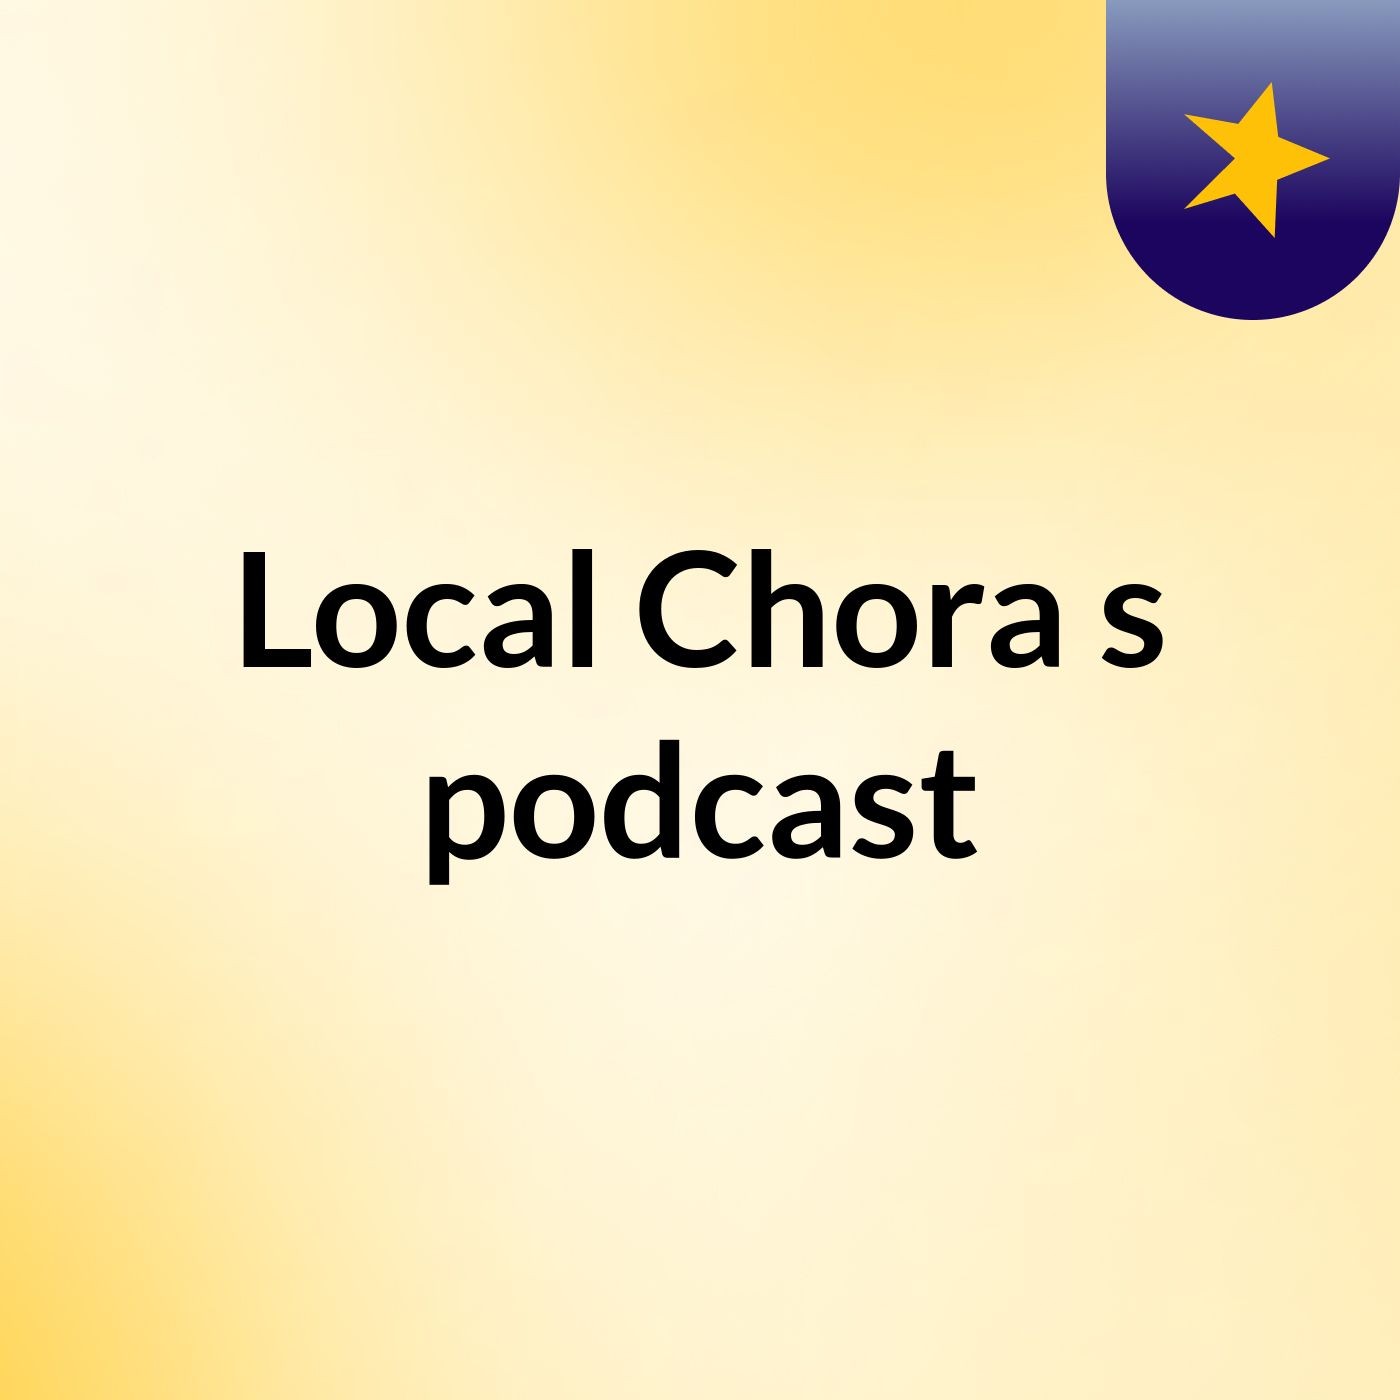 Local Chora's podcast